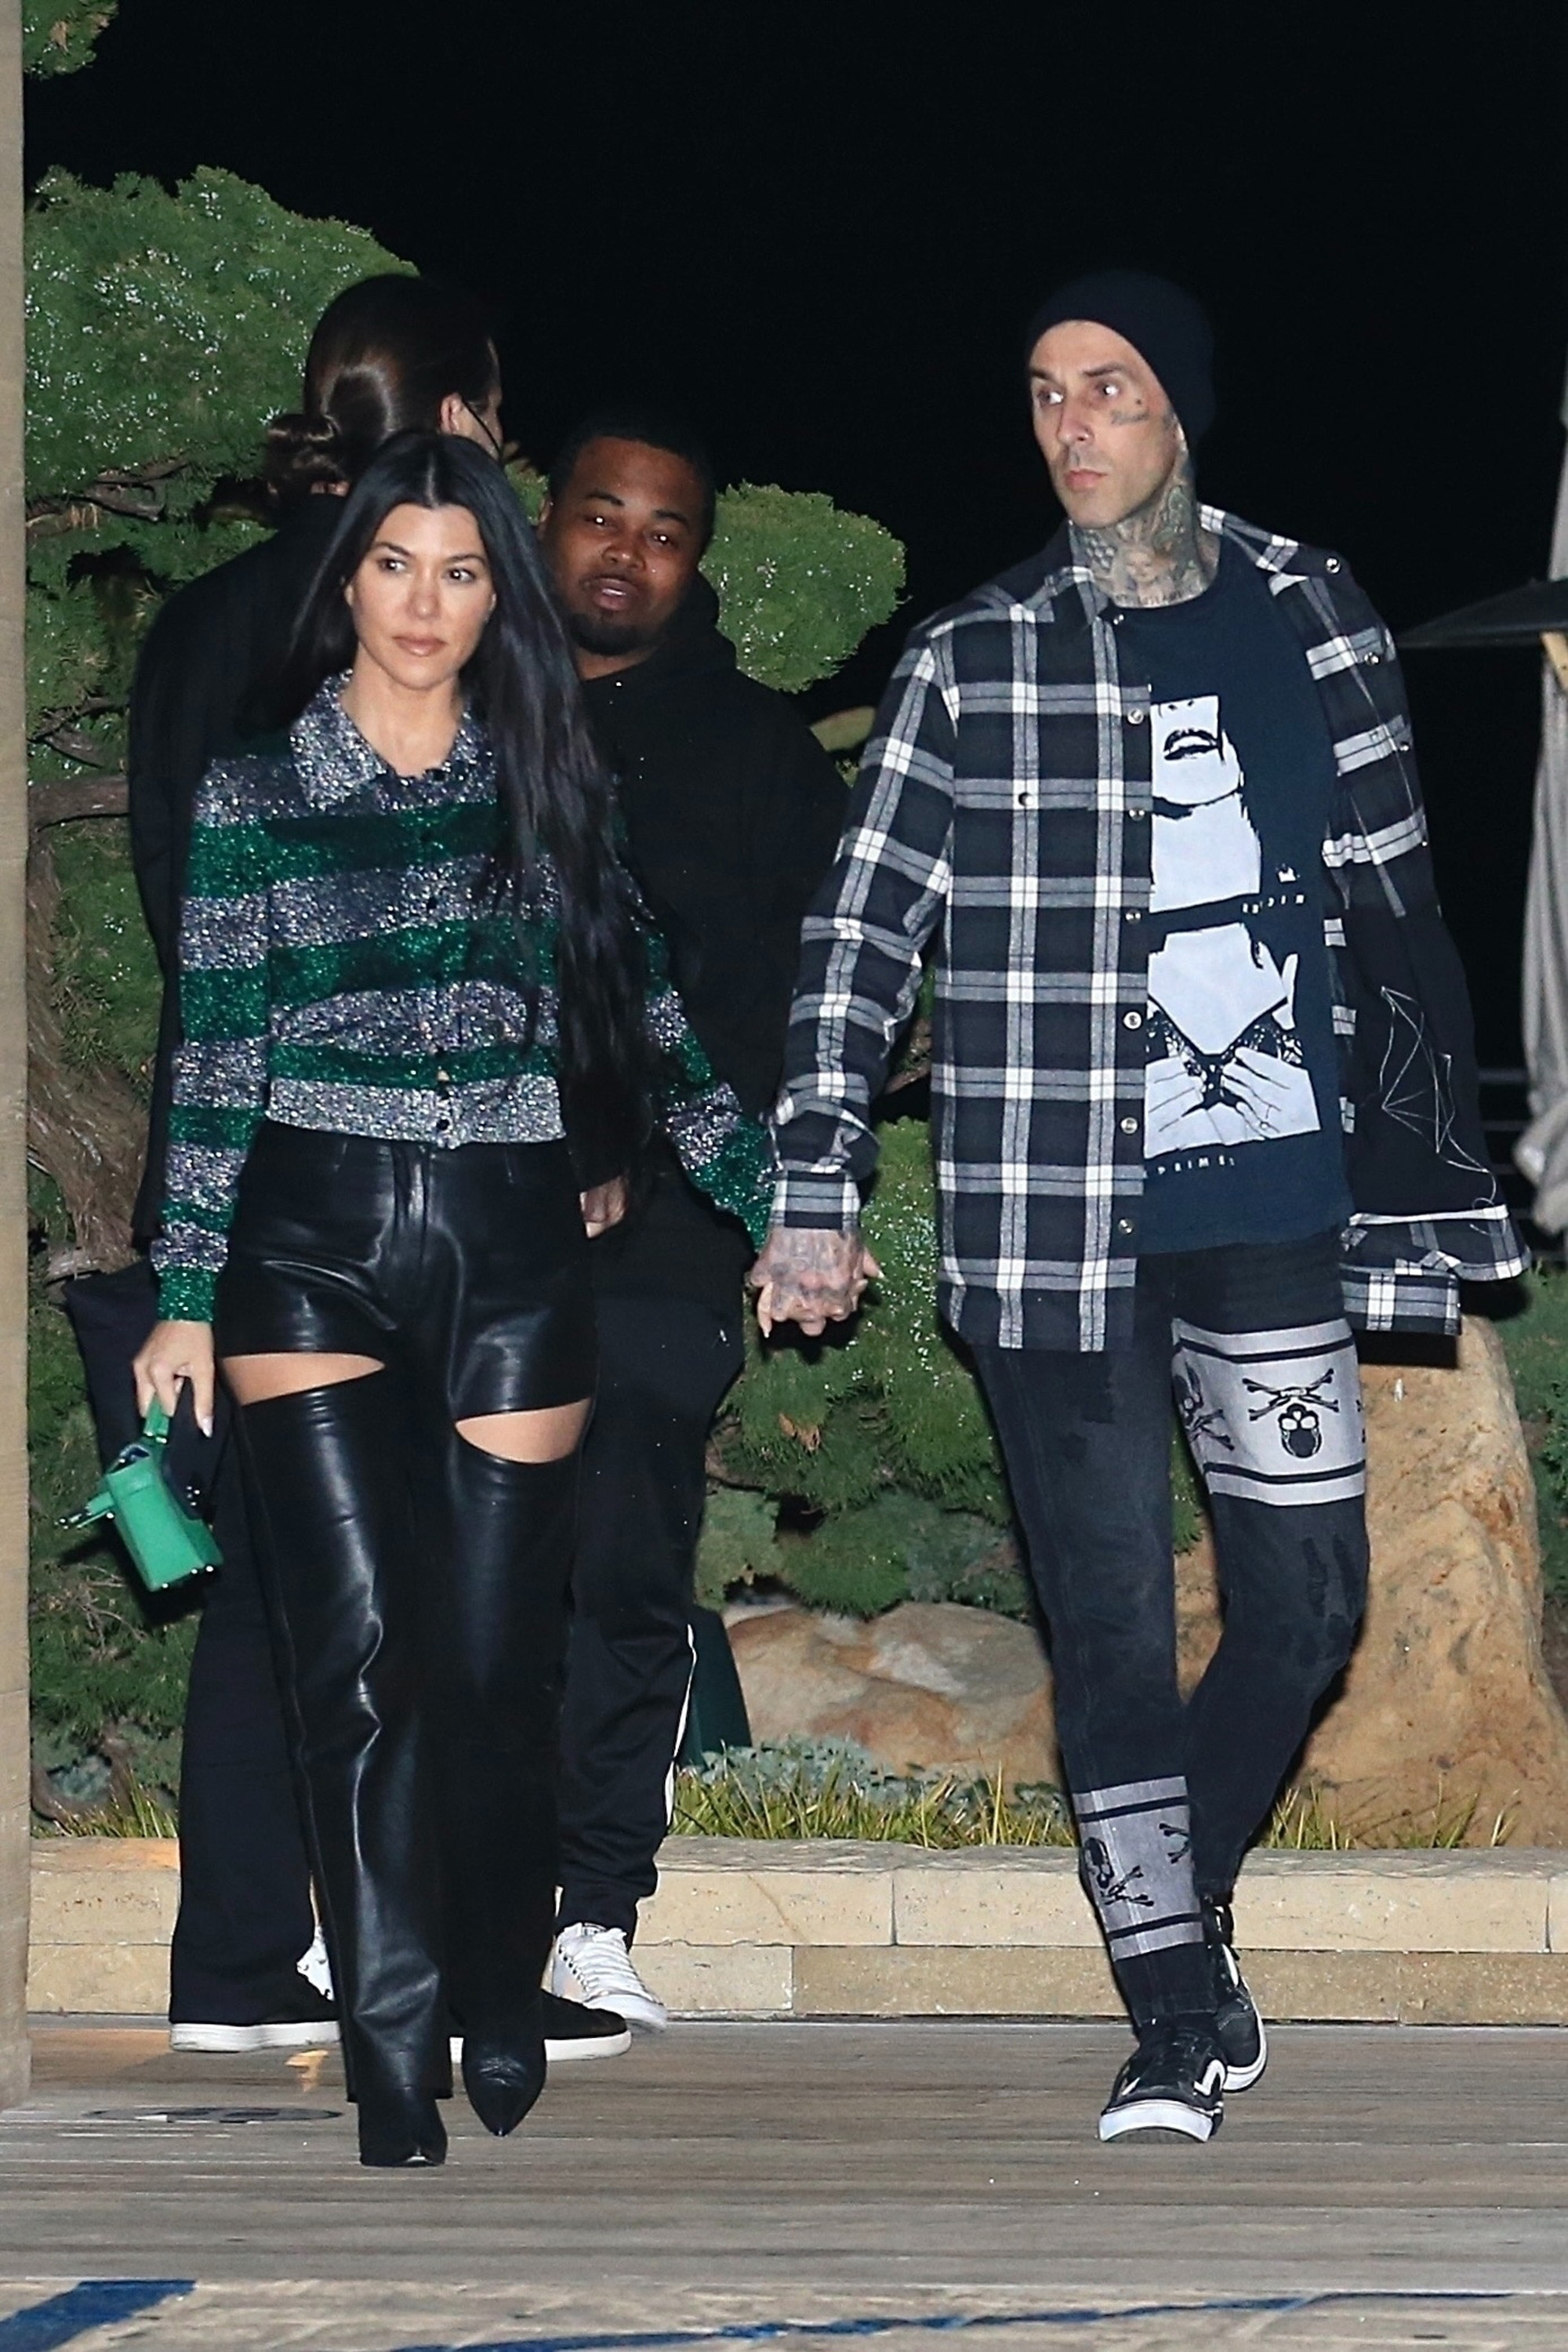 Kourtney Kardashian and Travis Barker walking together.